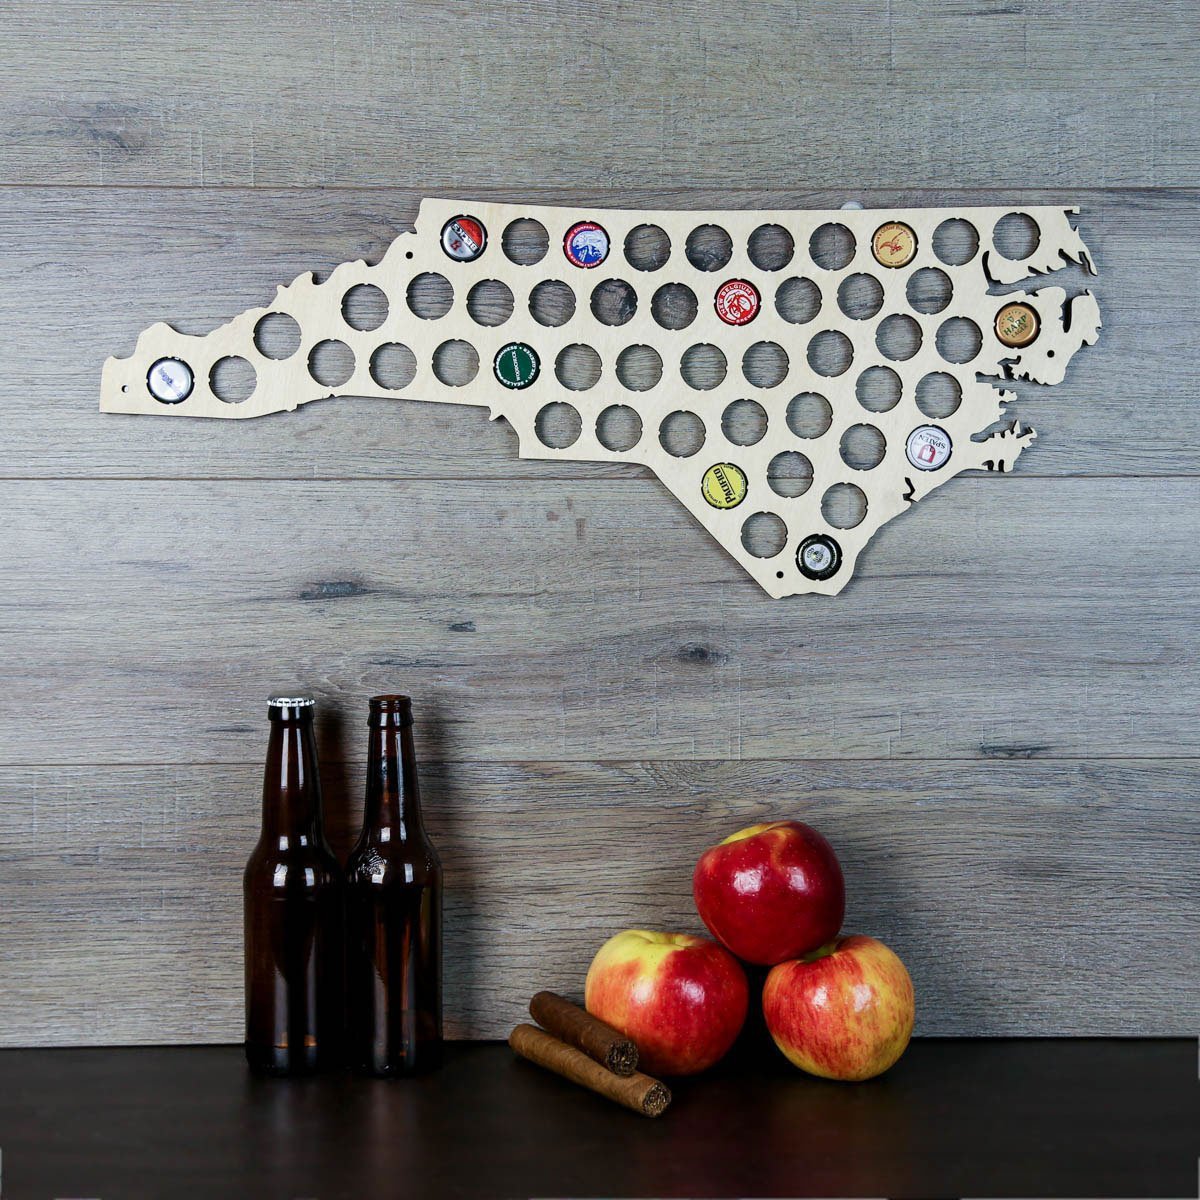 Torched Products Beer Bottle Cap Holder North Carolina Beer Cap Map (777575628917)